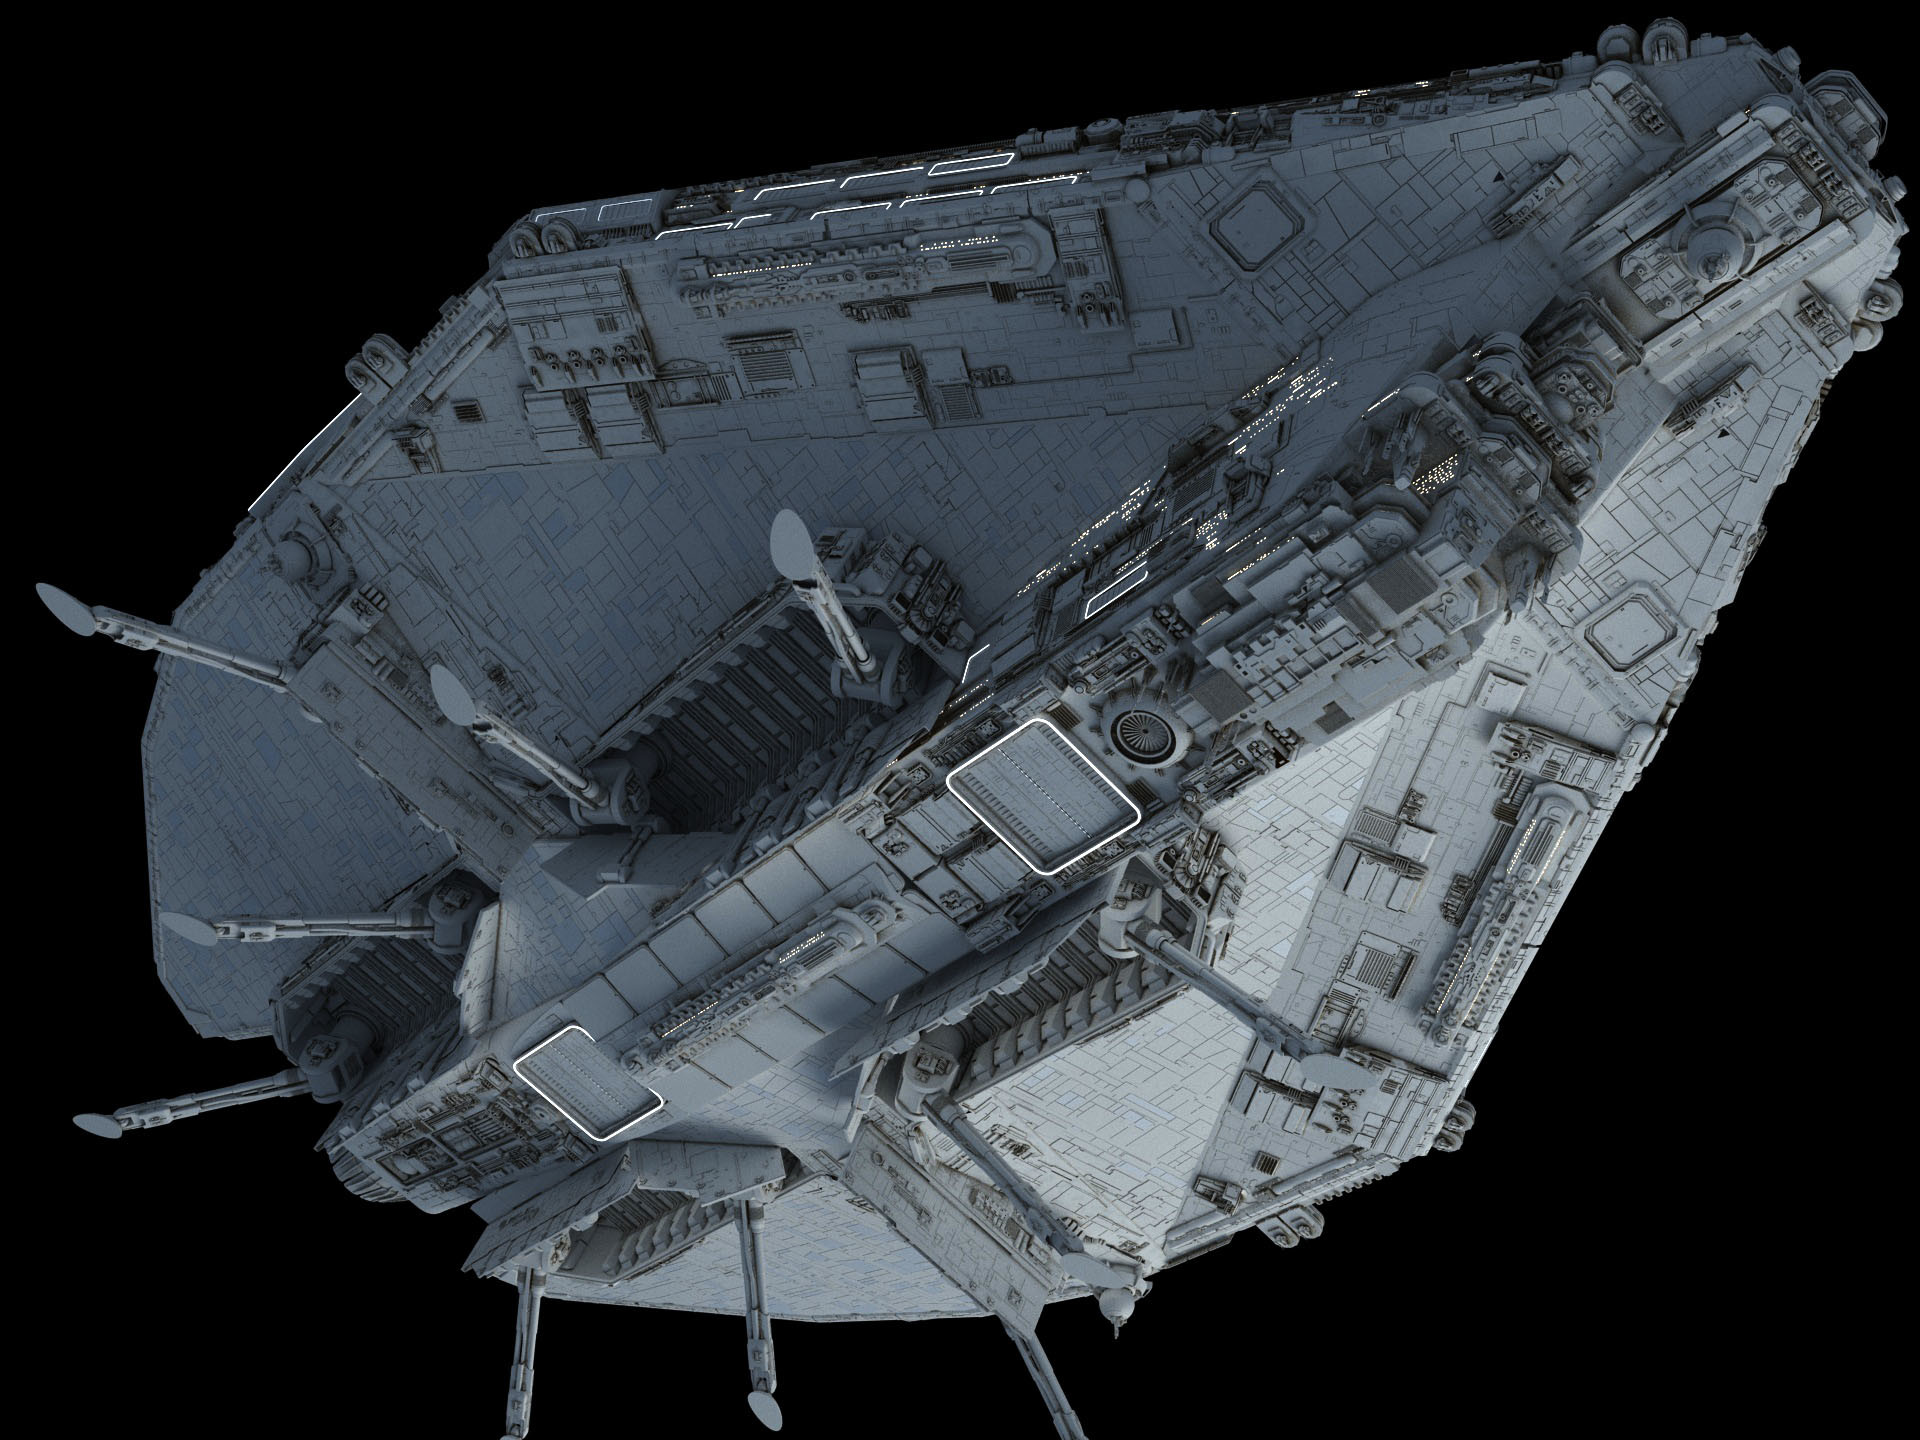 Fine Art: The Big, Beautiful Ships Of Star Wars